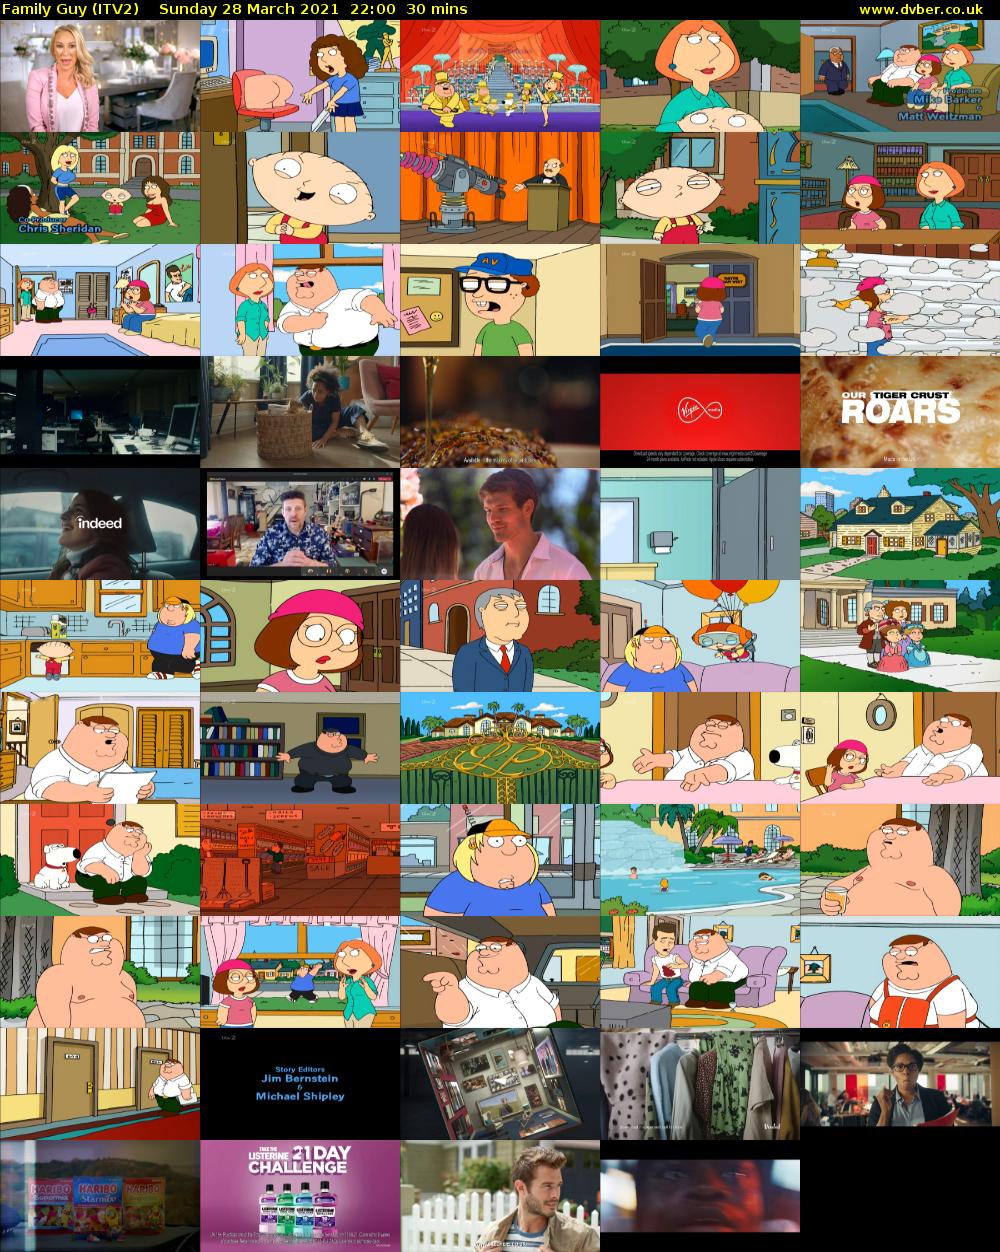 Family Guy (ITV2) Sunday 28 March 2021 22:00 - 22:30